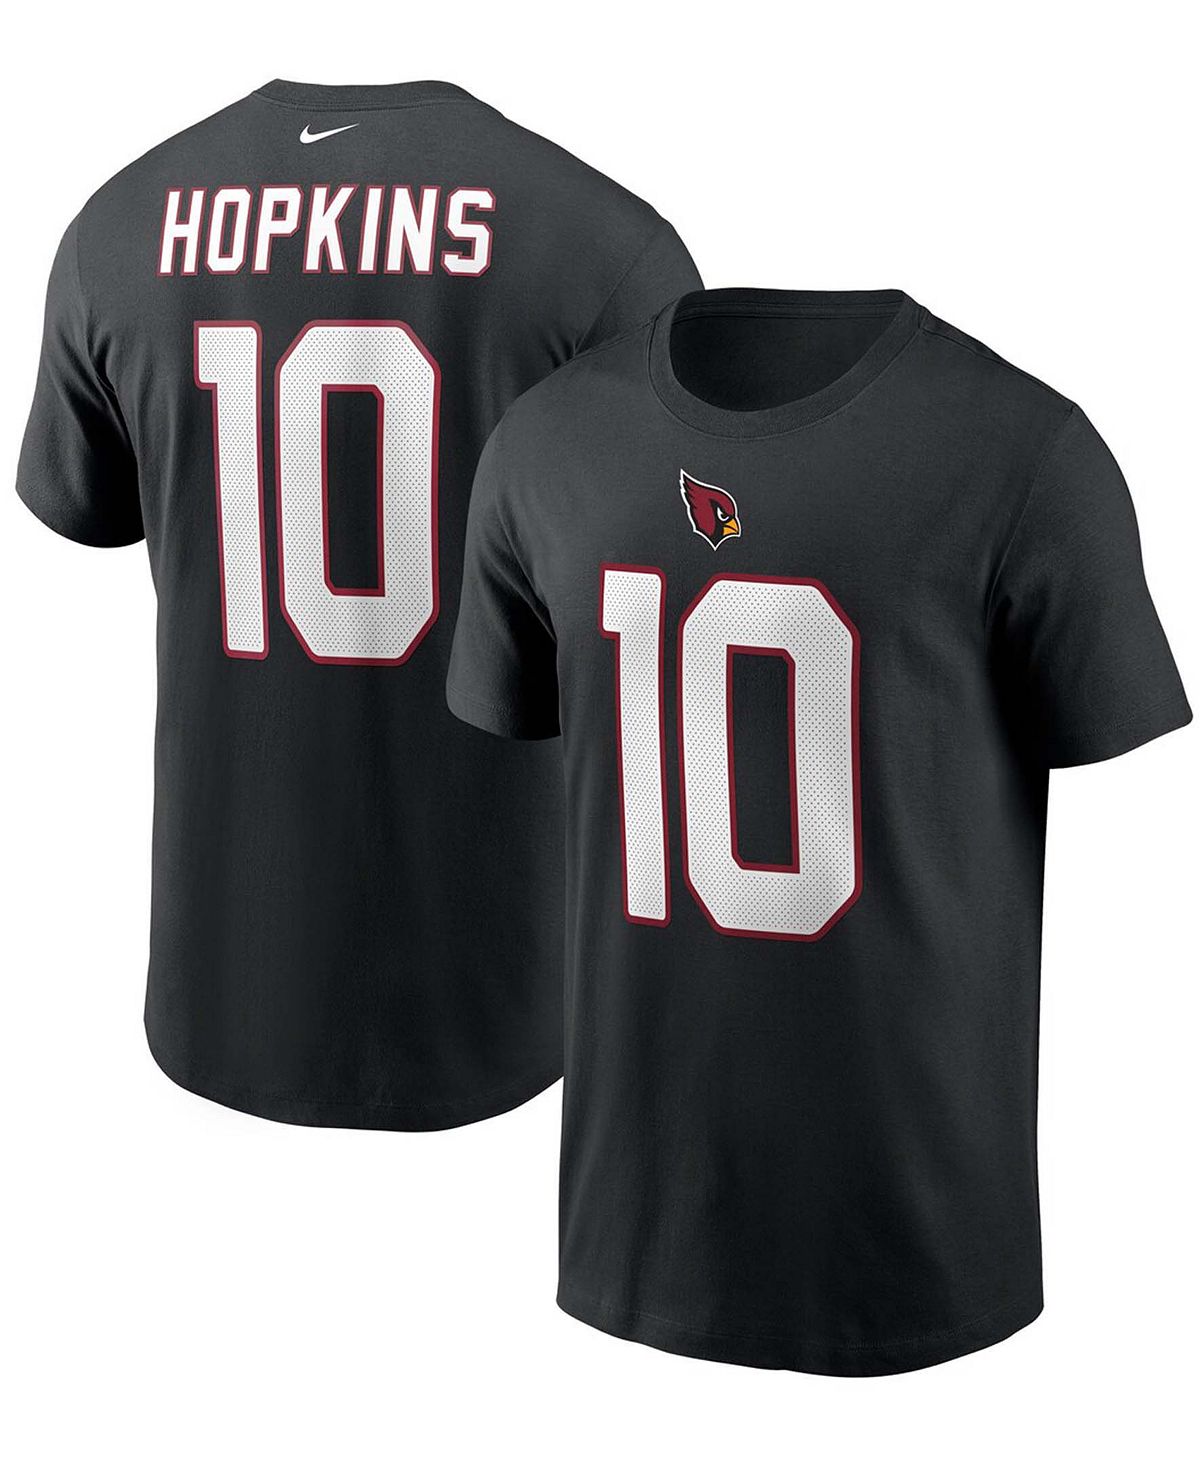 Мужская черная футболка с именем и номером DeAndre Hopkins Arizona Cardinals Nike мужская черная футболка randy johnson arizona diamondbacks city connect с именем и номером nike